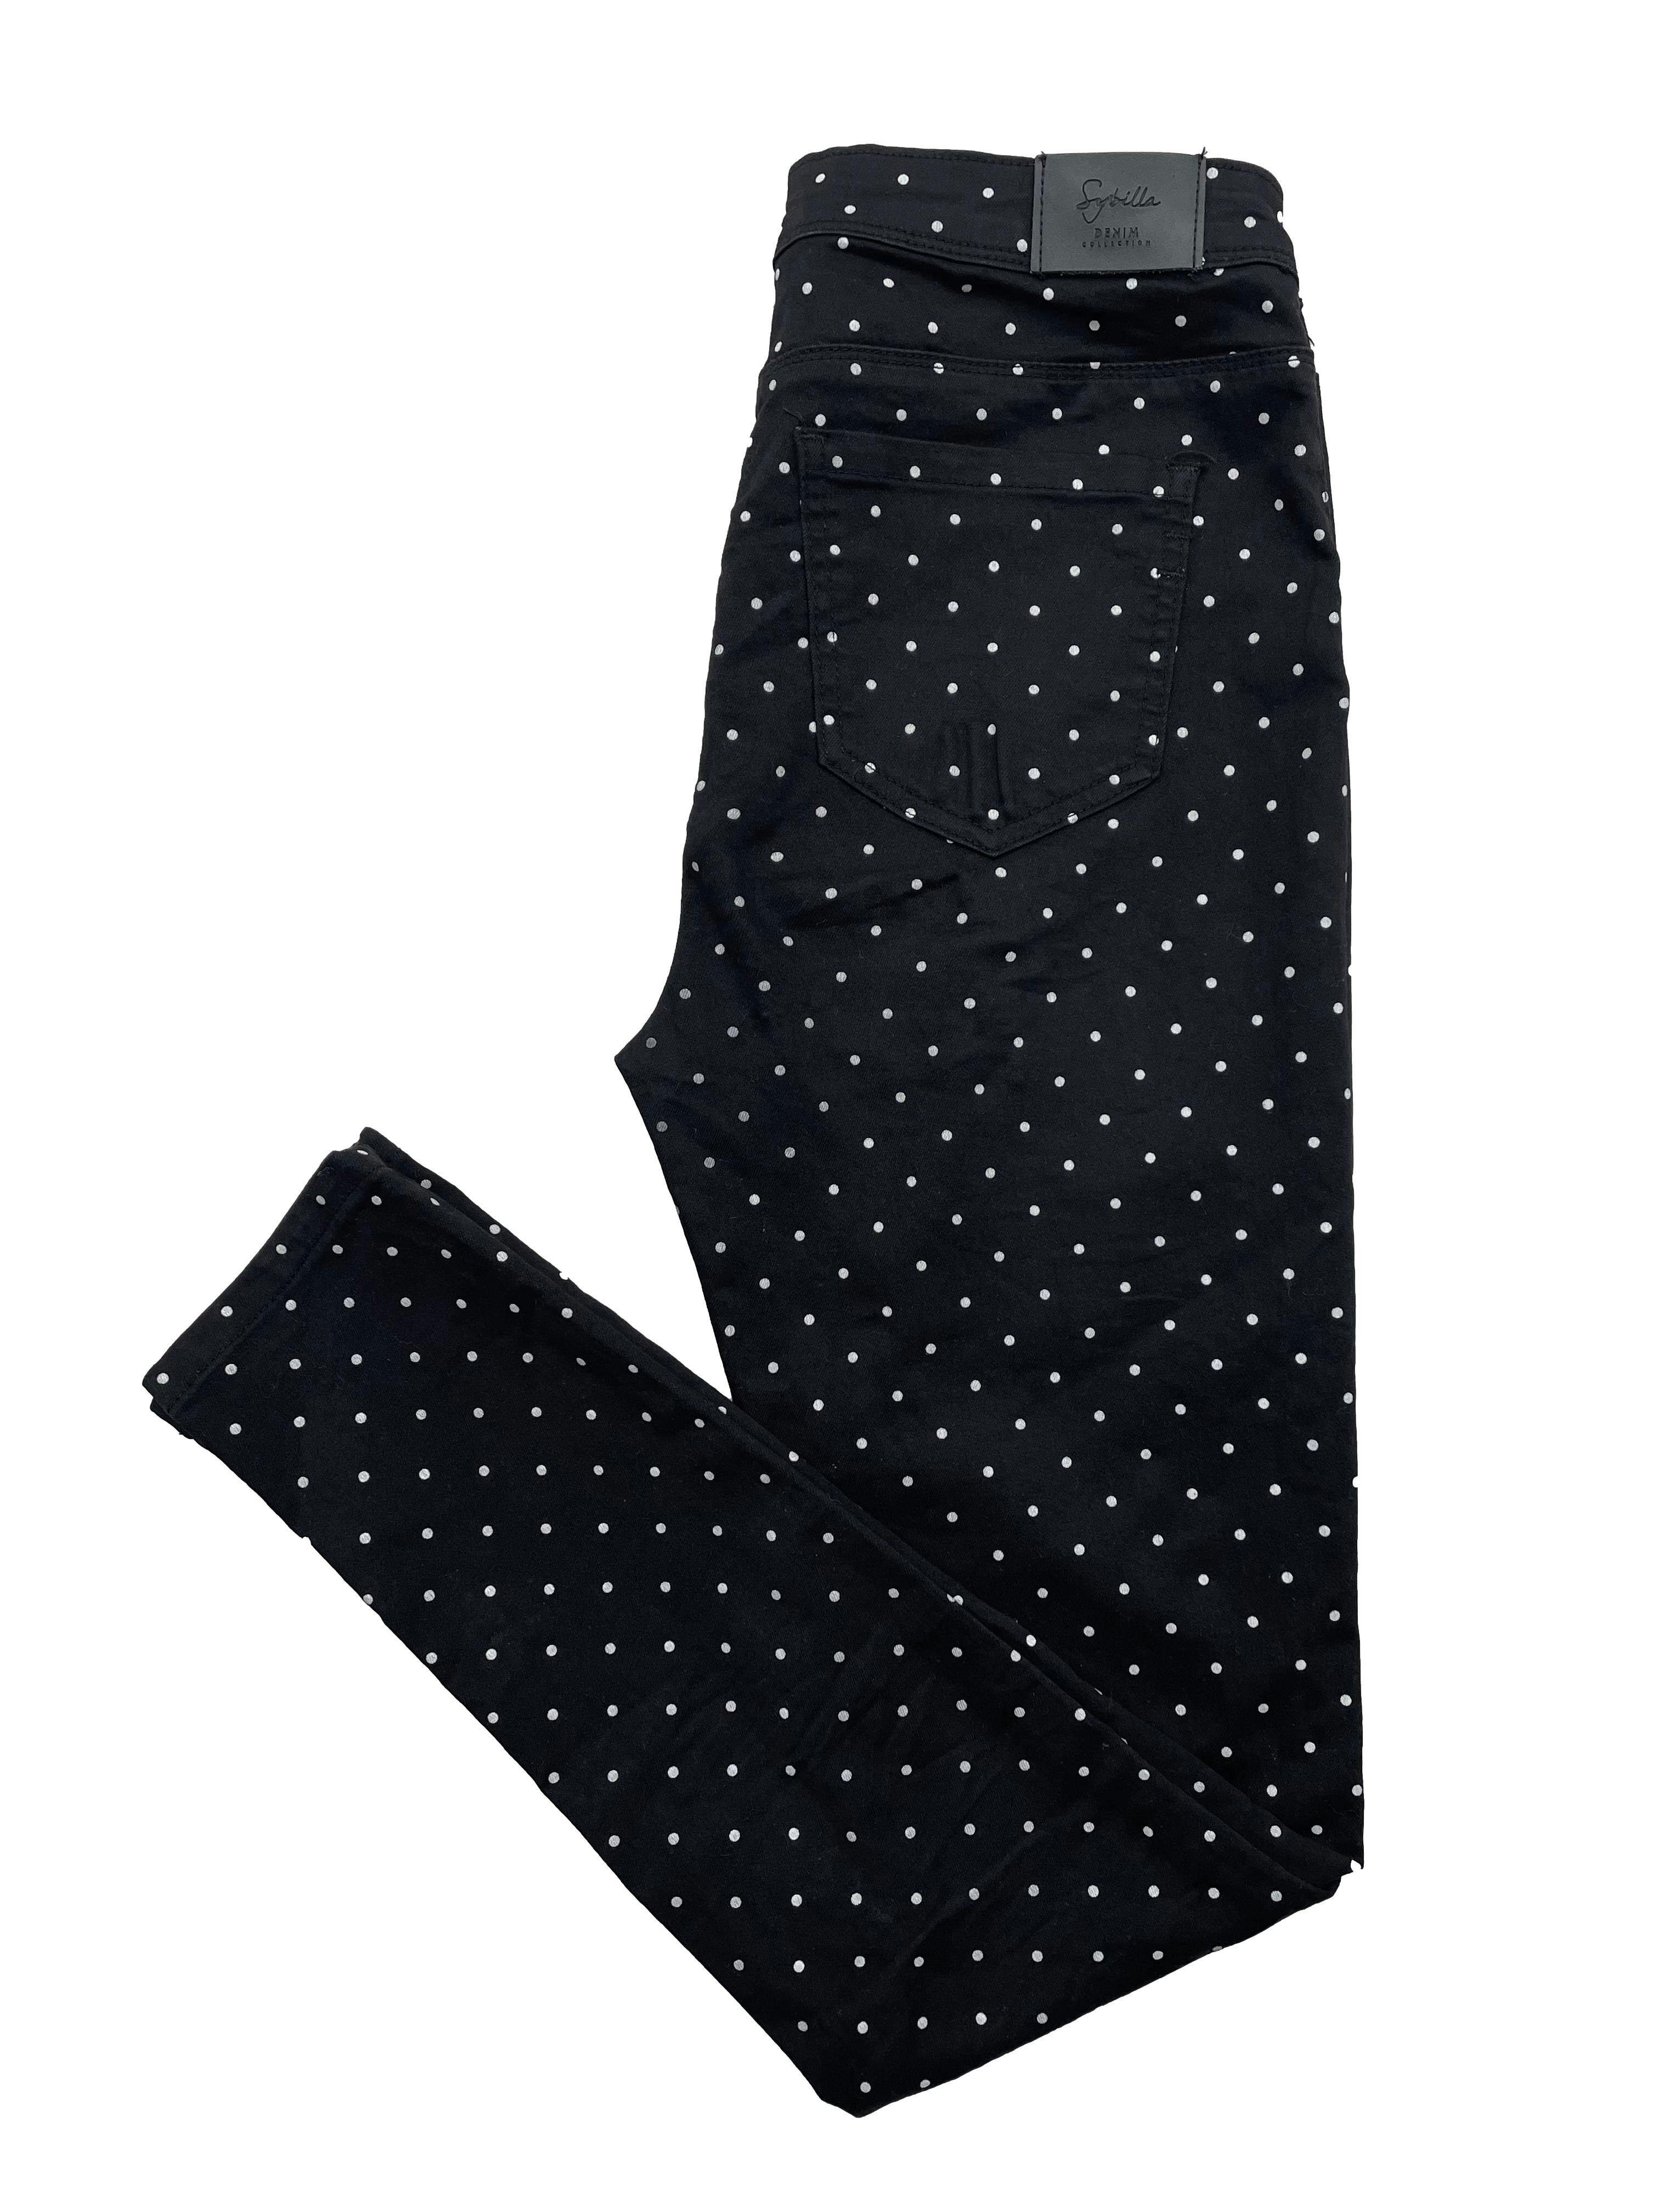 Skinny jean Sybilla negro con polka dots blancos, tiro alto. Cintura 70cm Tiro 26cm Largo 95cm